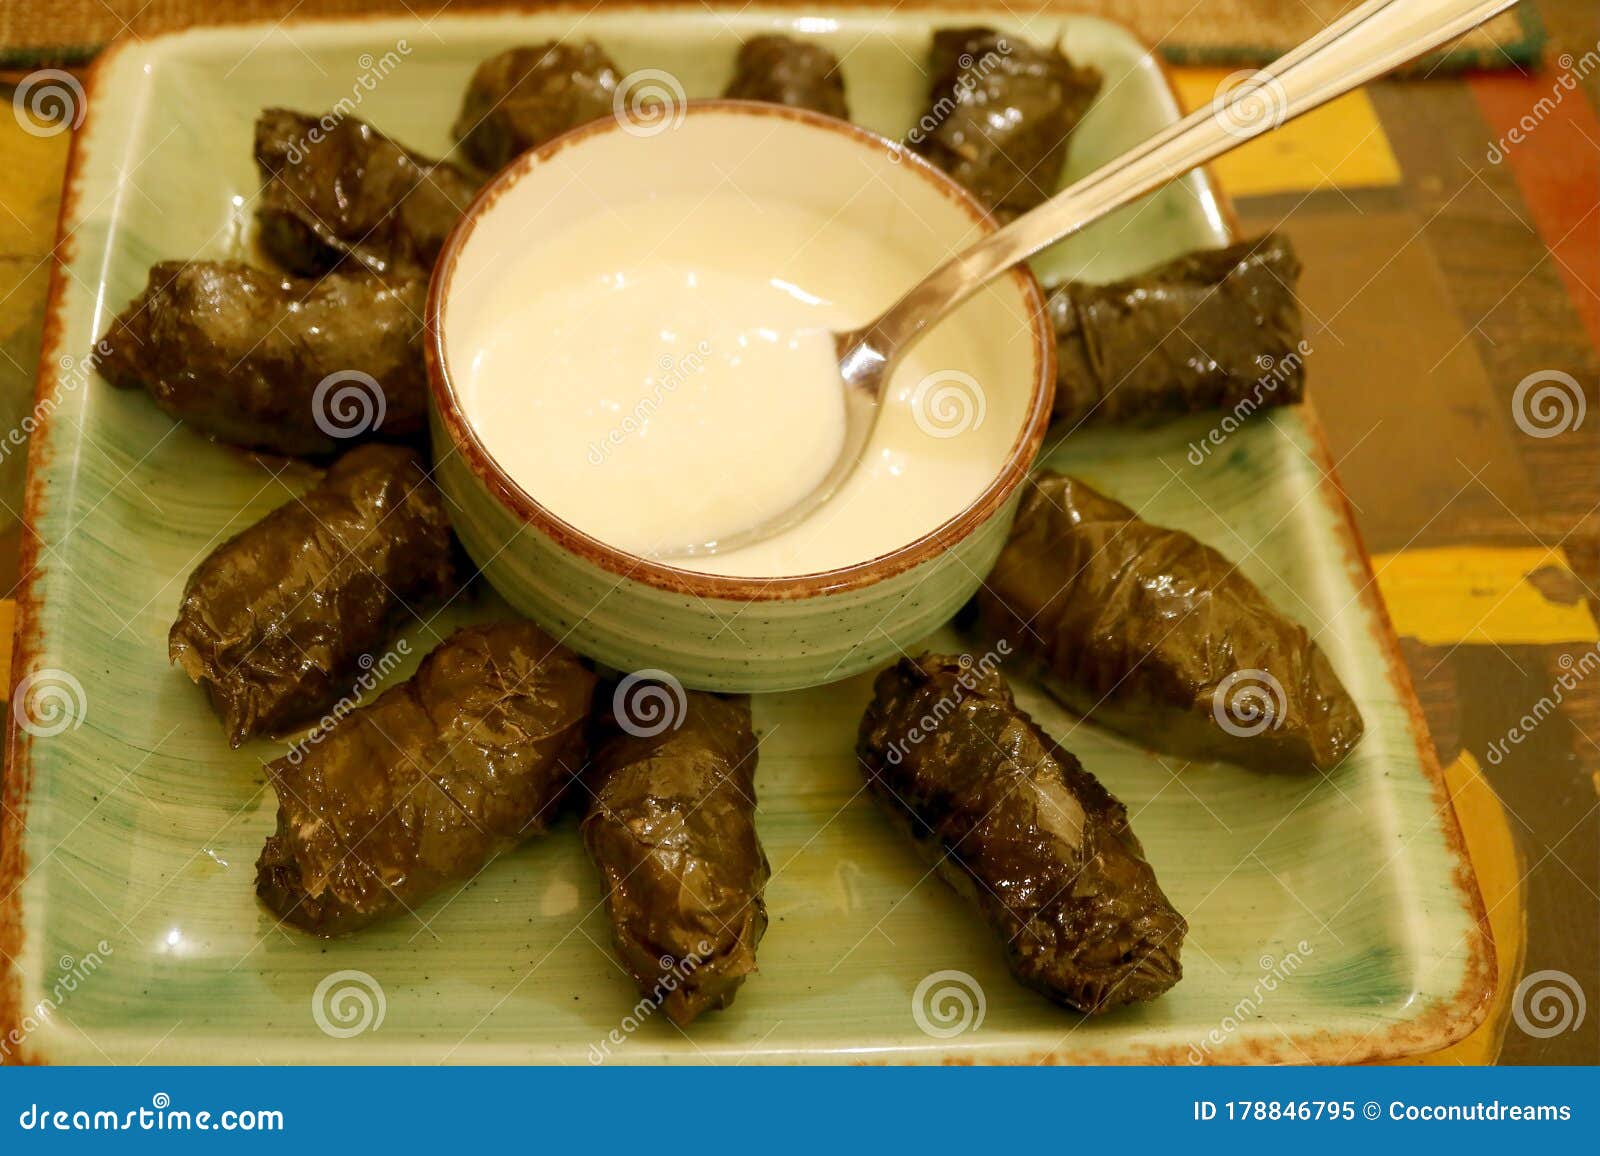 plate of tasty armenian dolma tolma or grape leaves rolls with yogurt dip